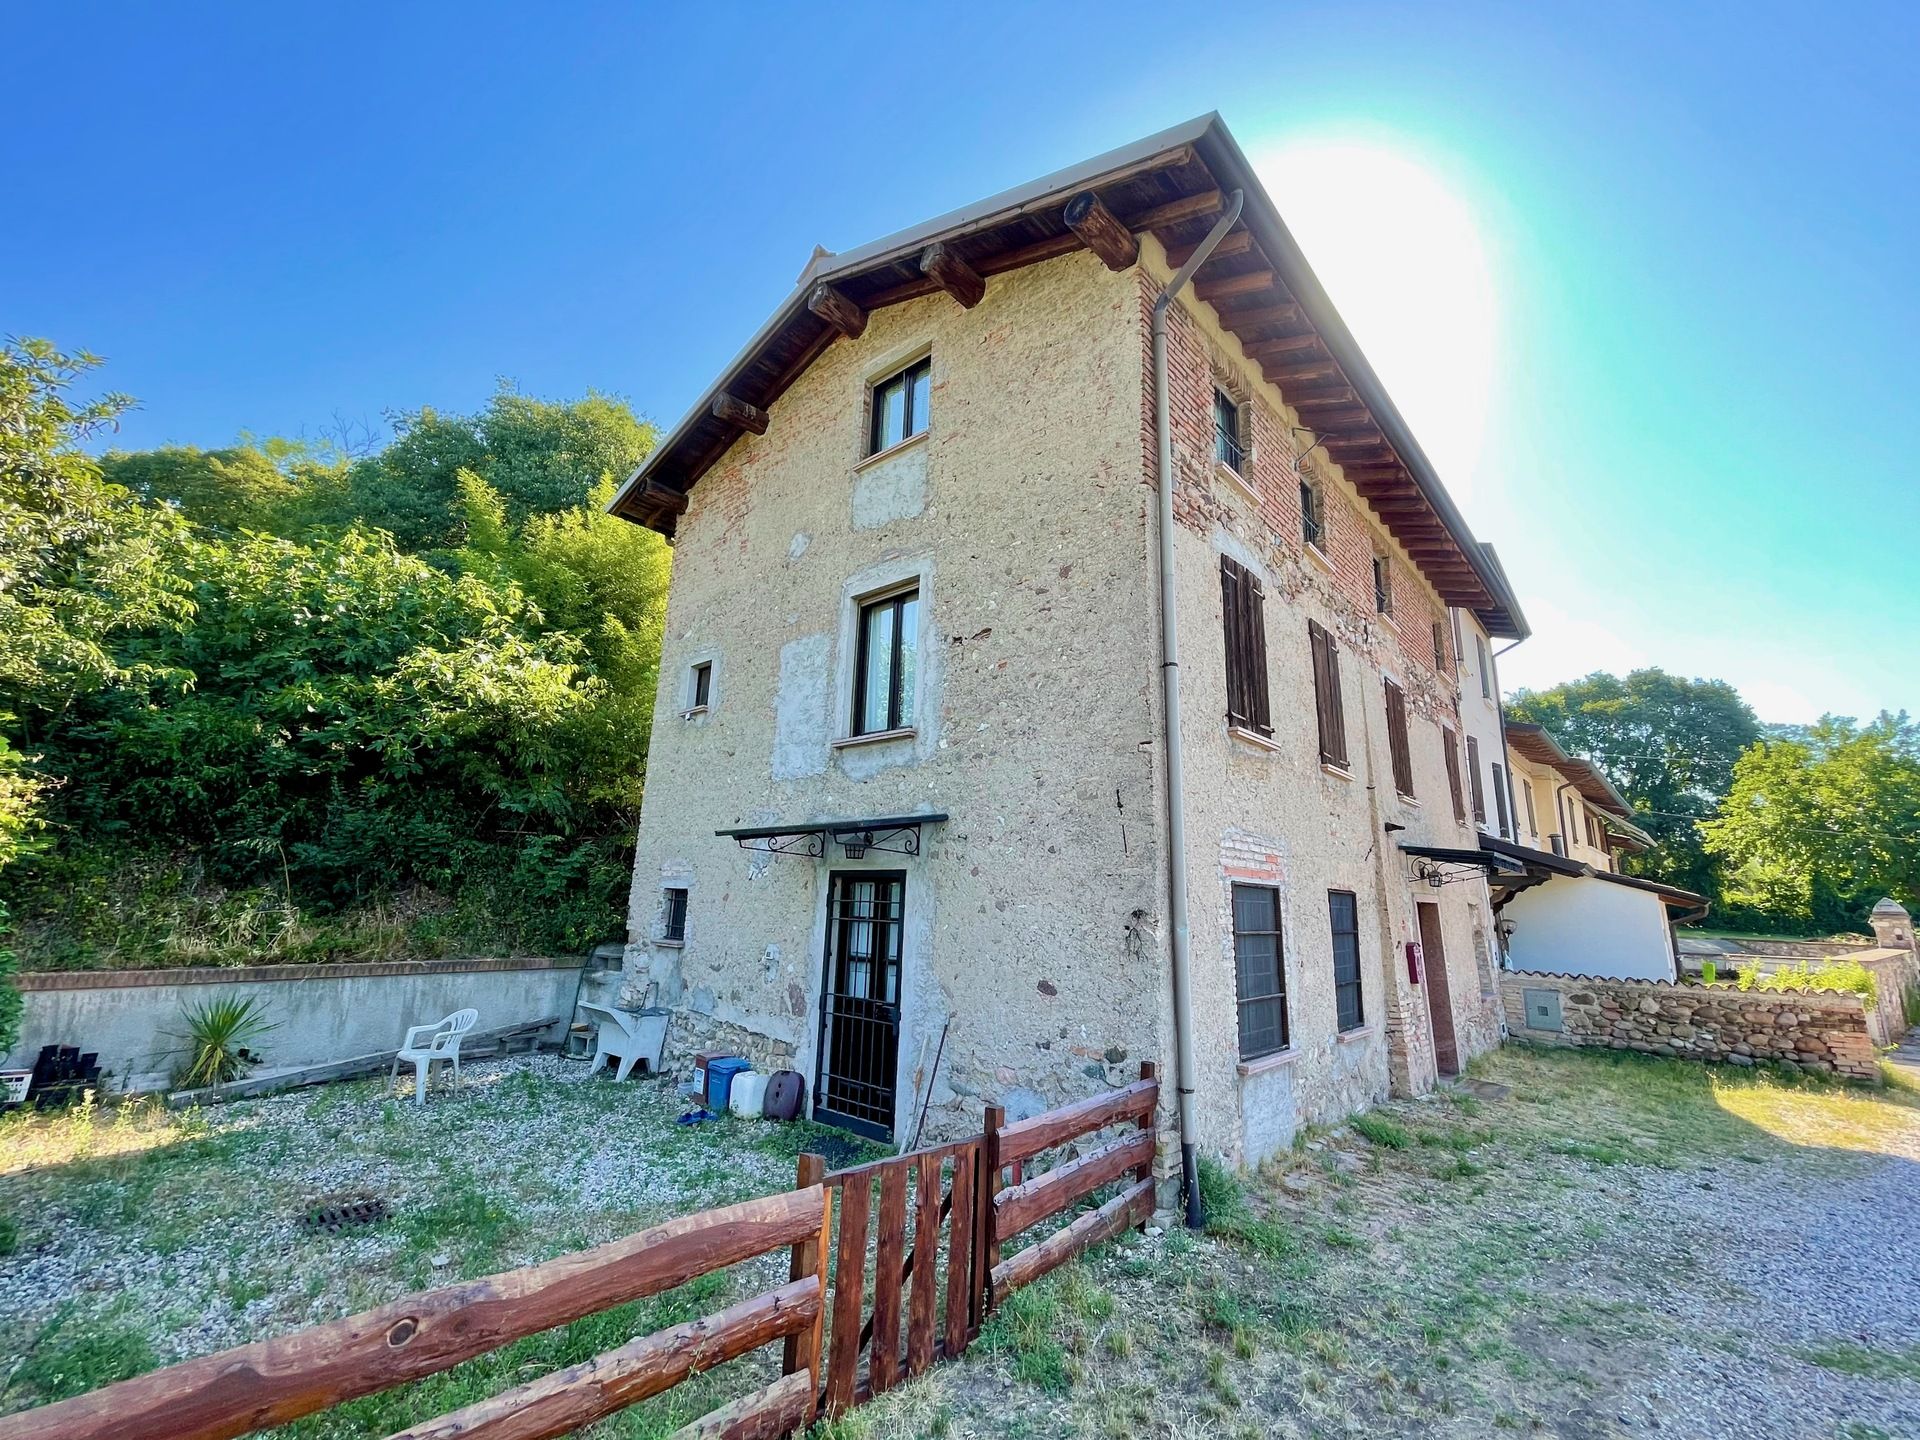 For sale cottage in quiet zone Solferino Lombardia